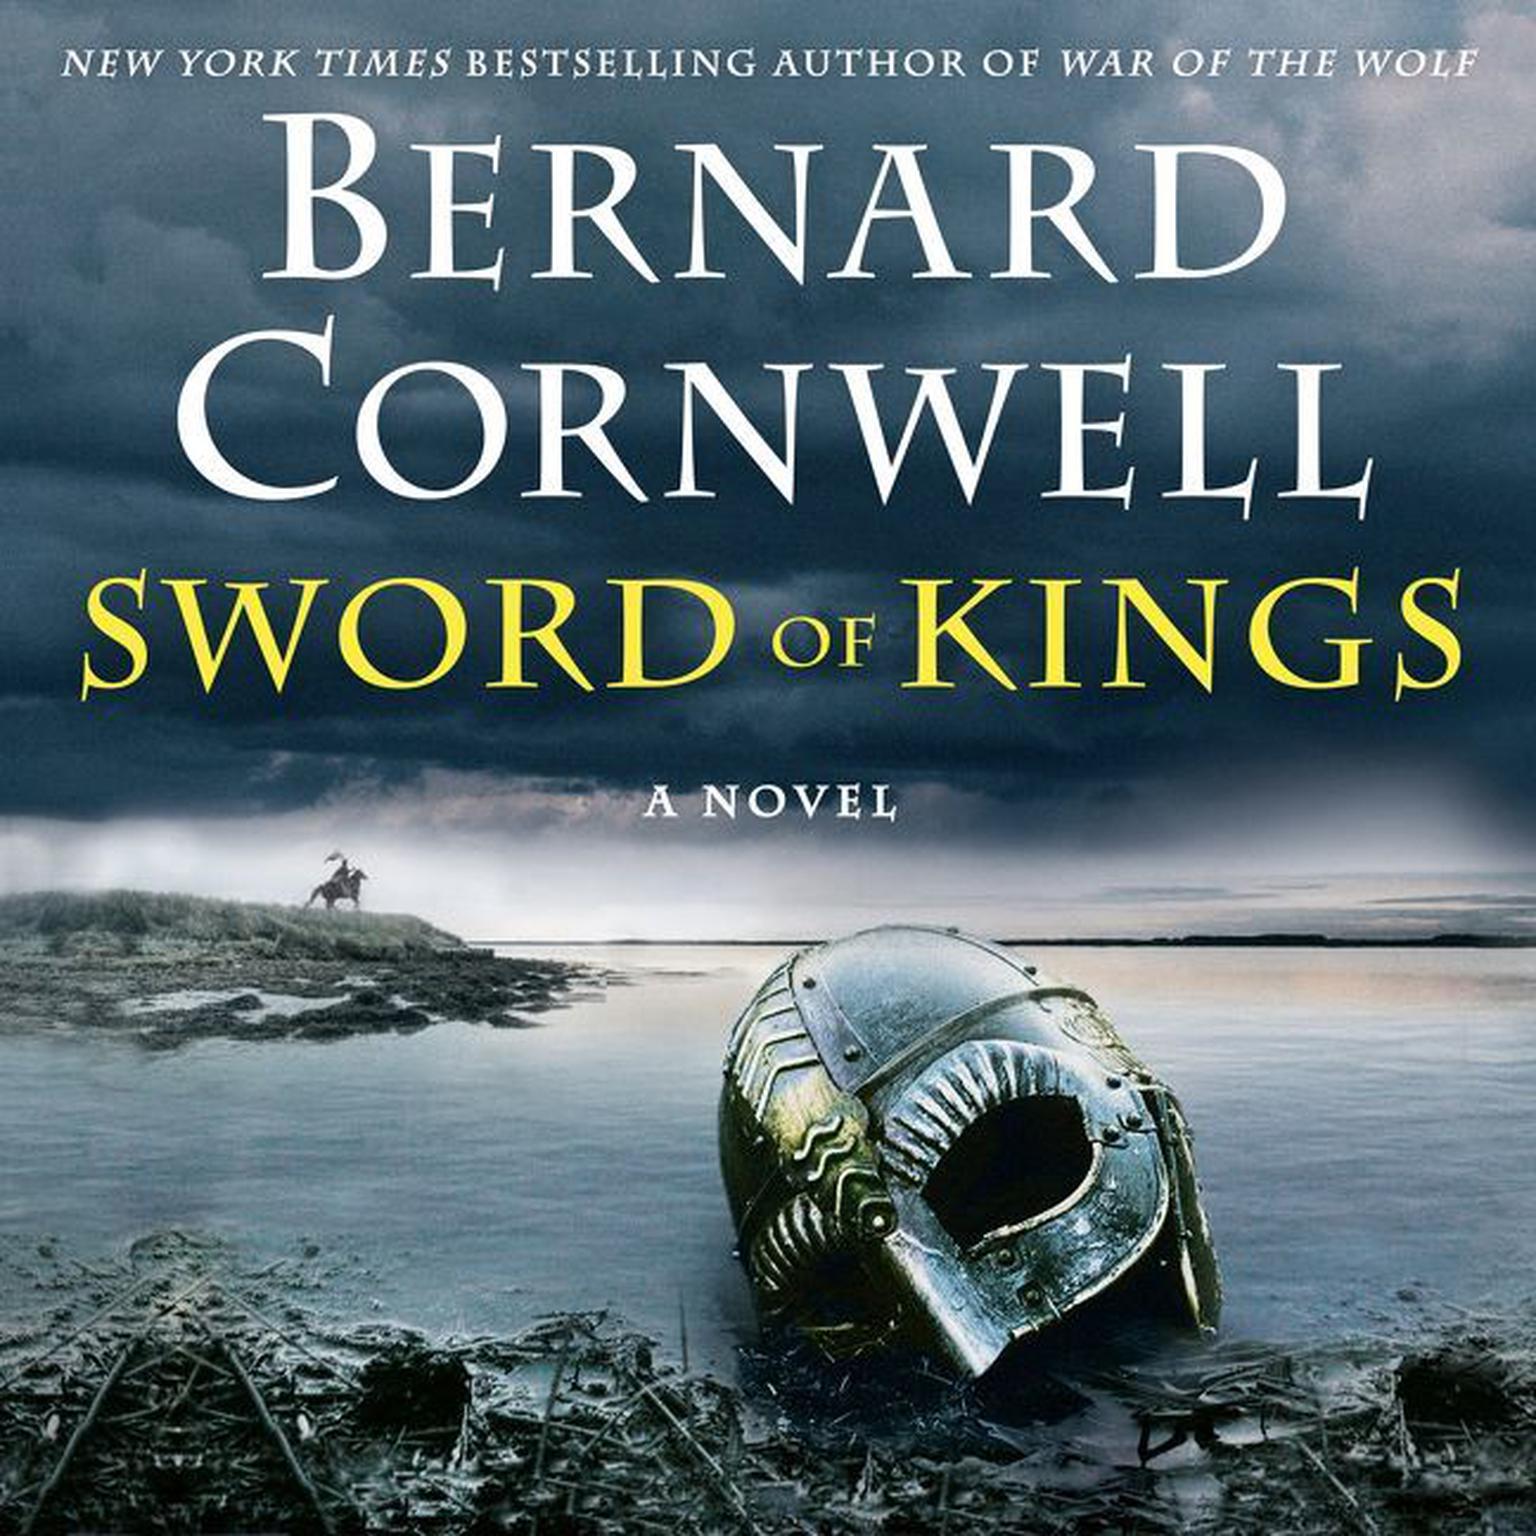 Sword of Kings: A Novel Audiobook, by Bernard Cornwell